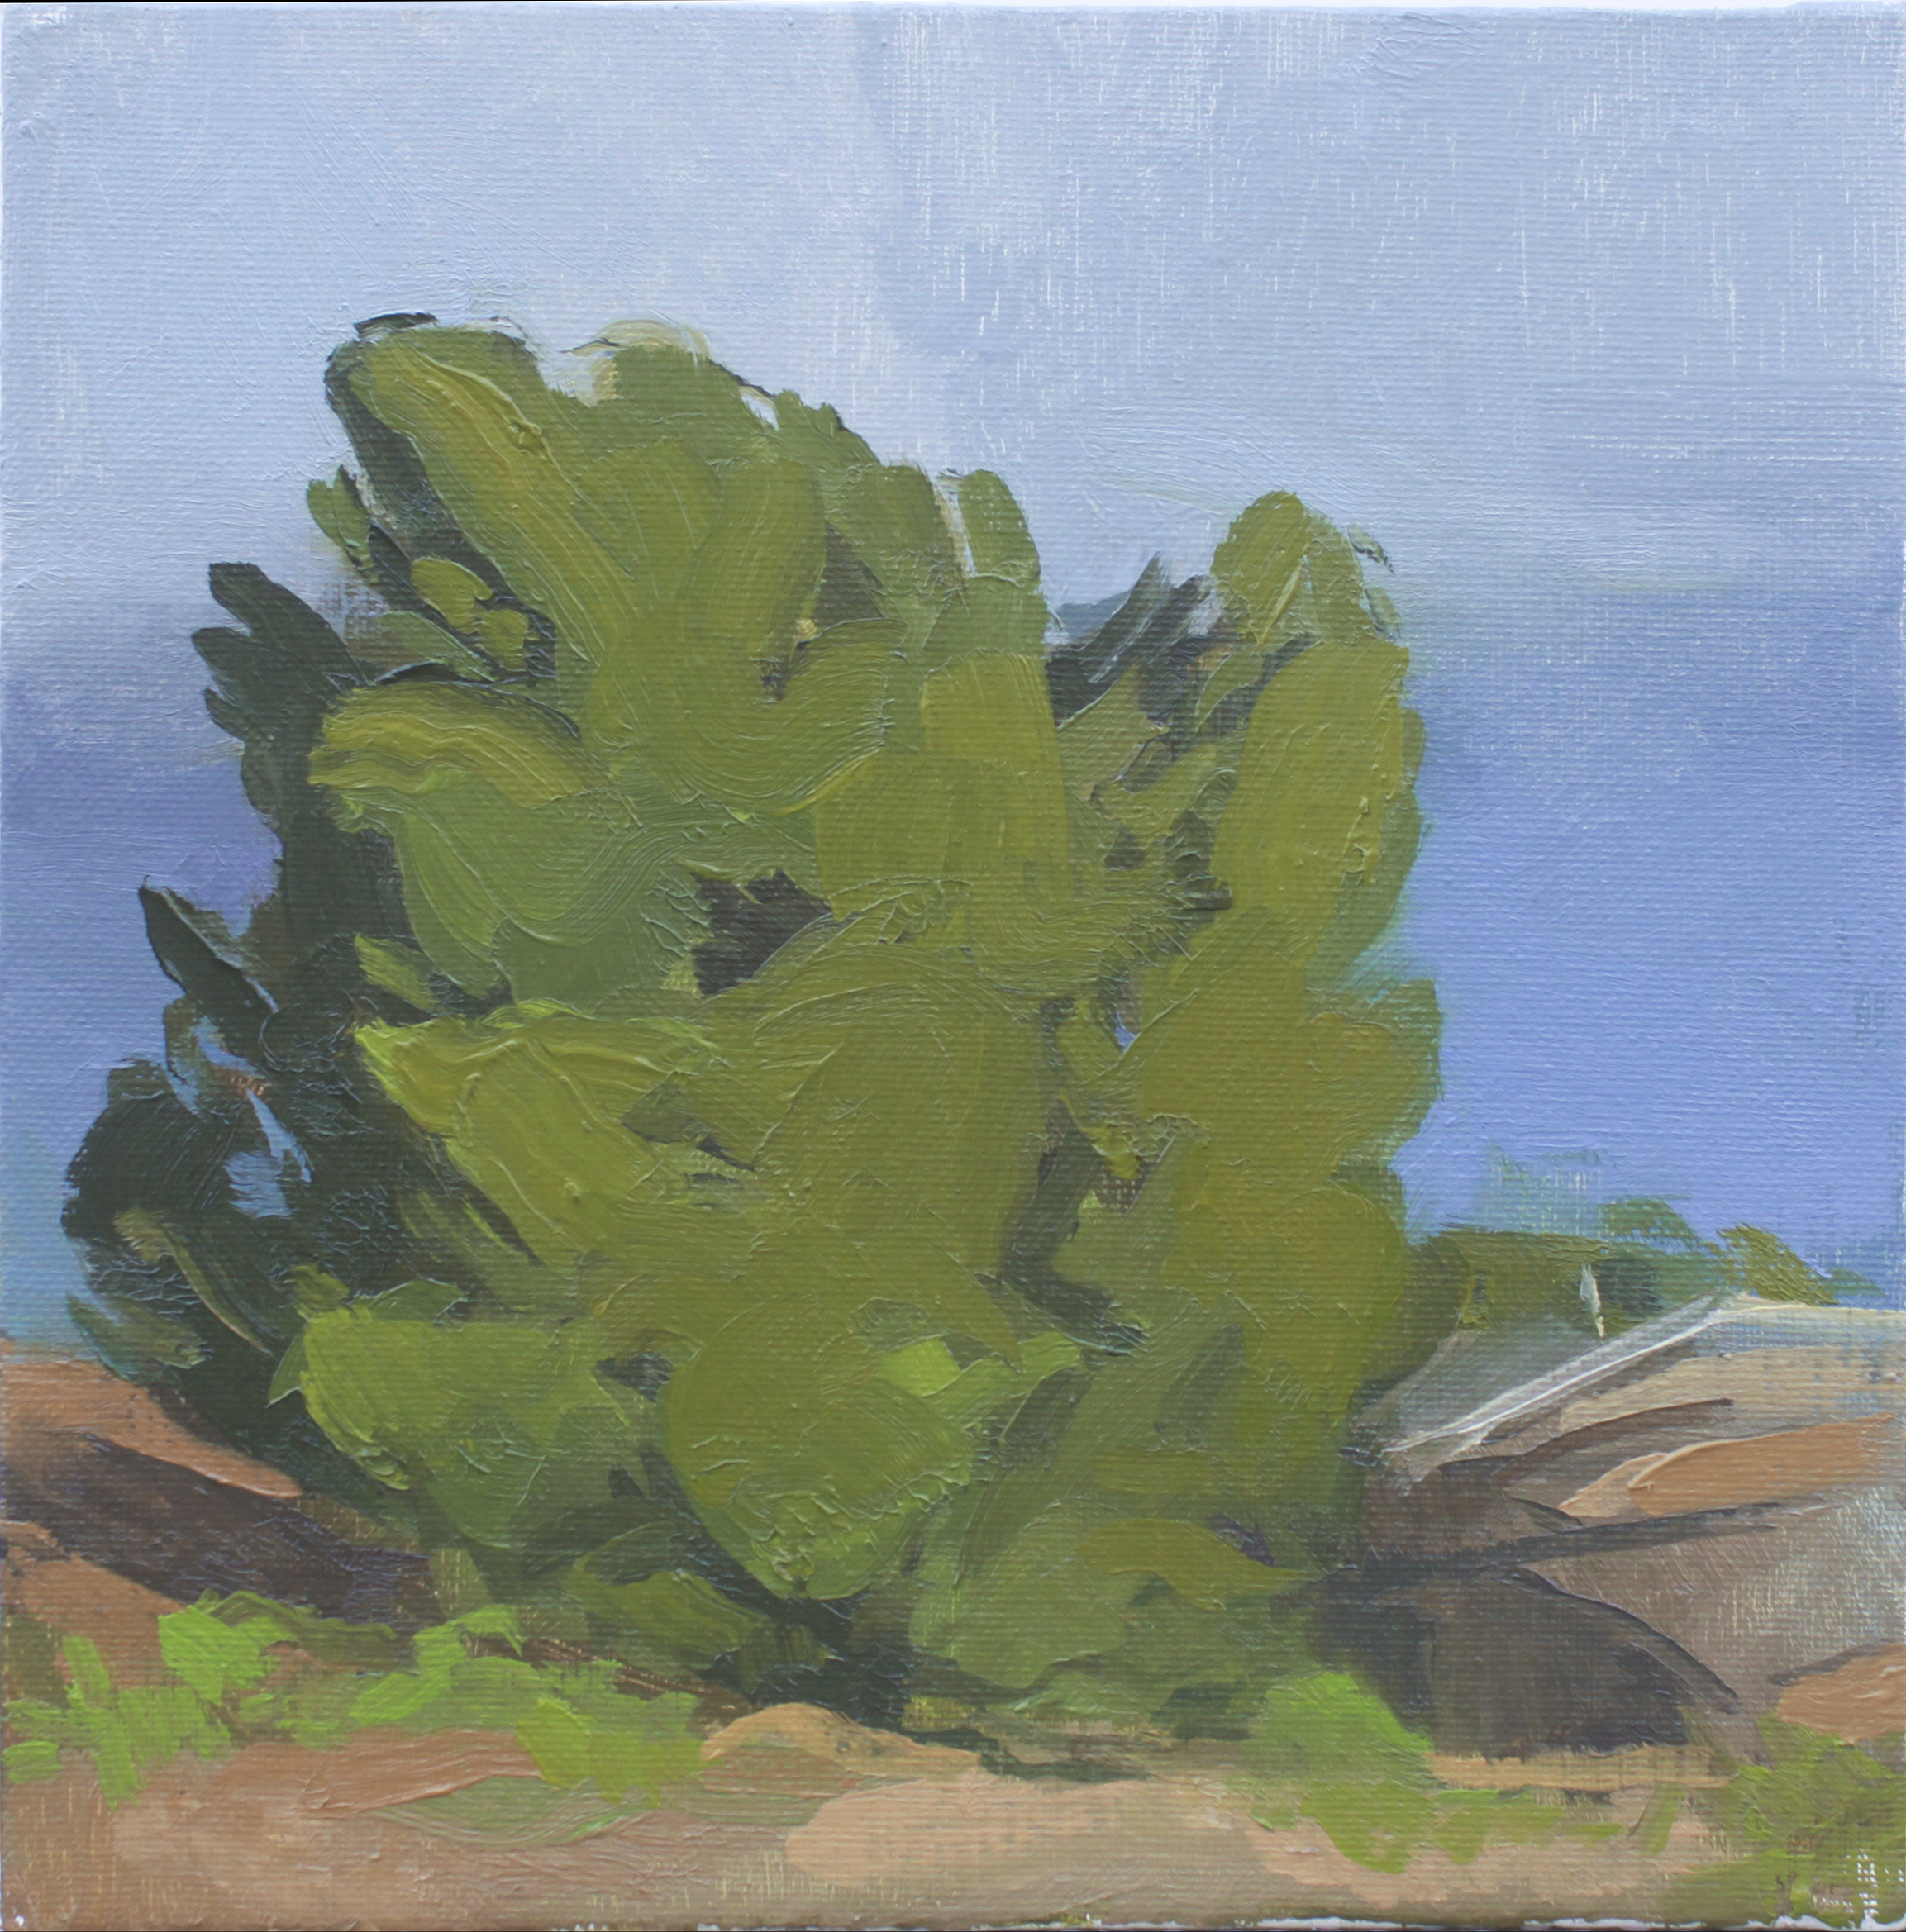    tree on dartmoor     oil on canvas 8x8" 2013  private collection Studio City, CA 